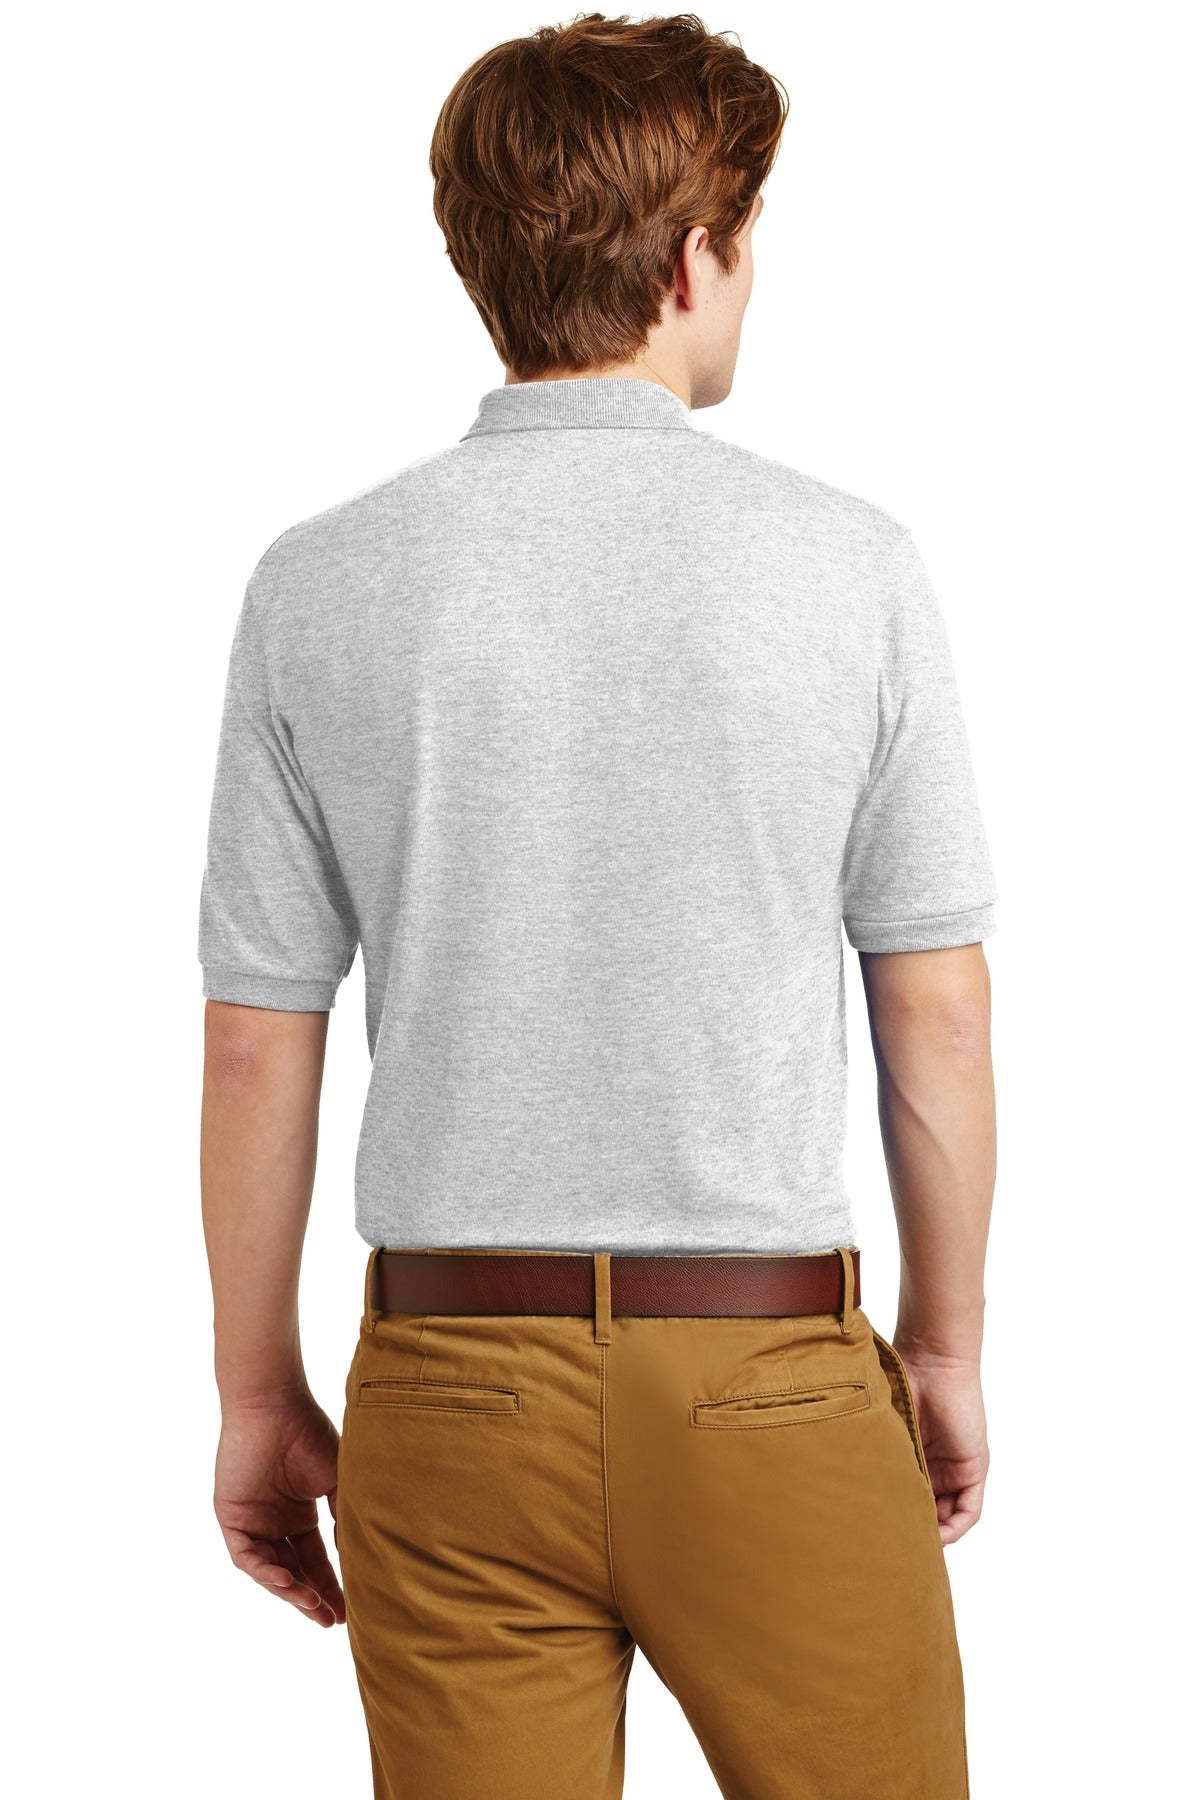 JERZEES® - SpotShield™ 5.4-Ounce Jersey Knit Sport Shirt. 437M [Ash] - DFW Impression